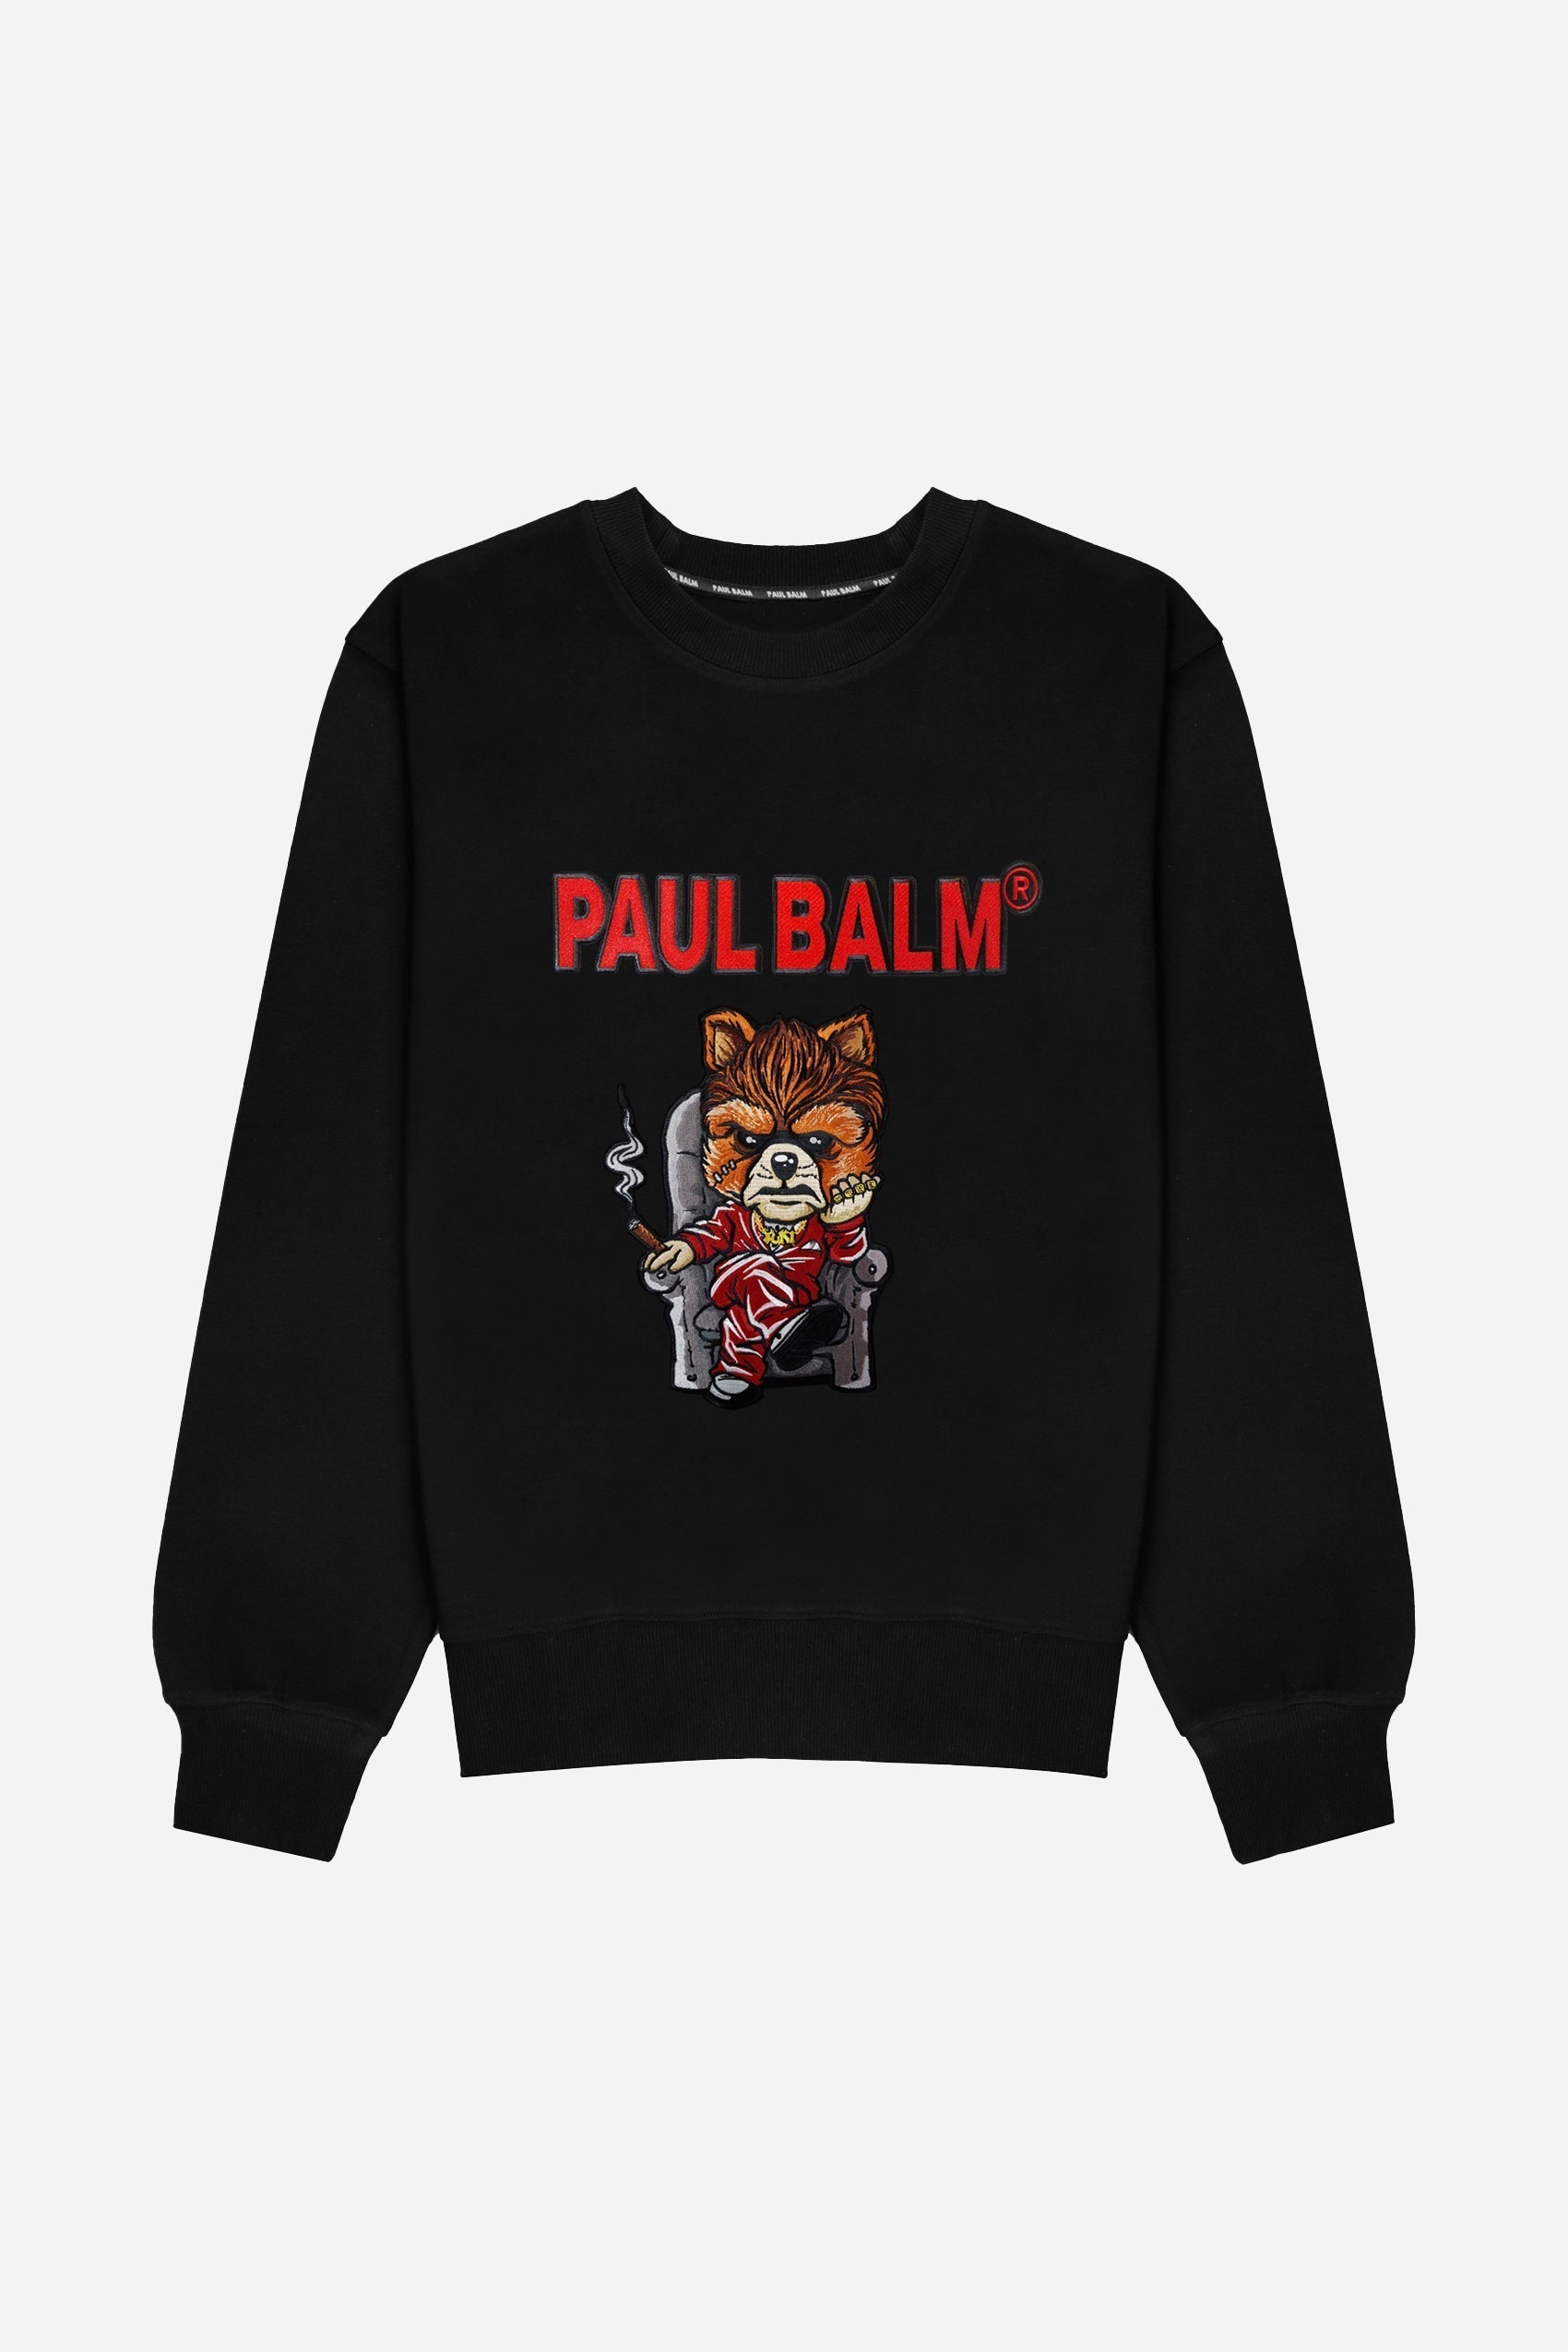 Embroidered Yuki Boss Sweatshirt - Limited to 300 - PAUL BALM WORLD